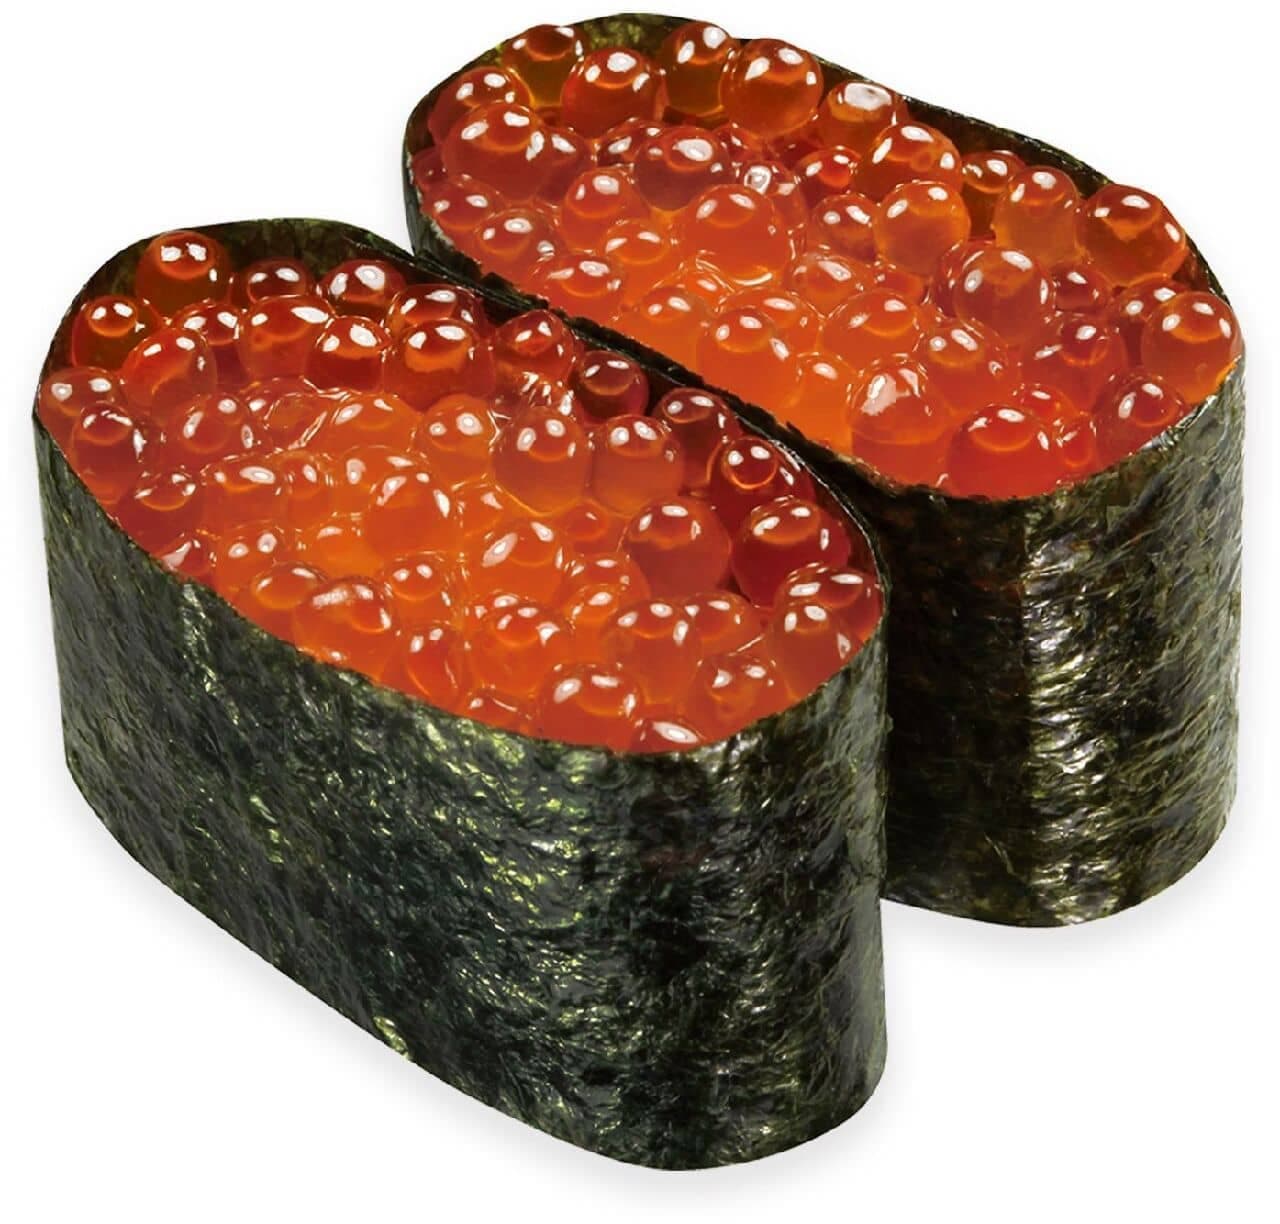 Kura Sushi "Luxury salmon roe warship"